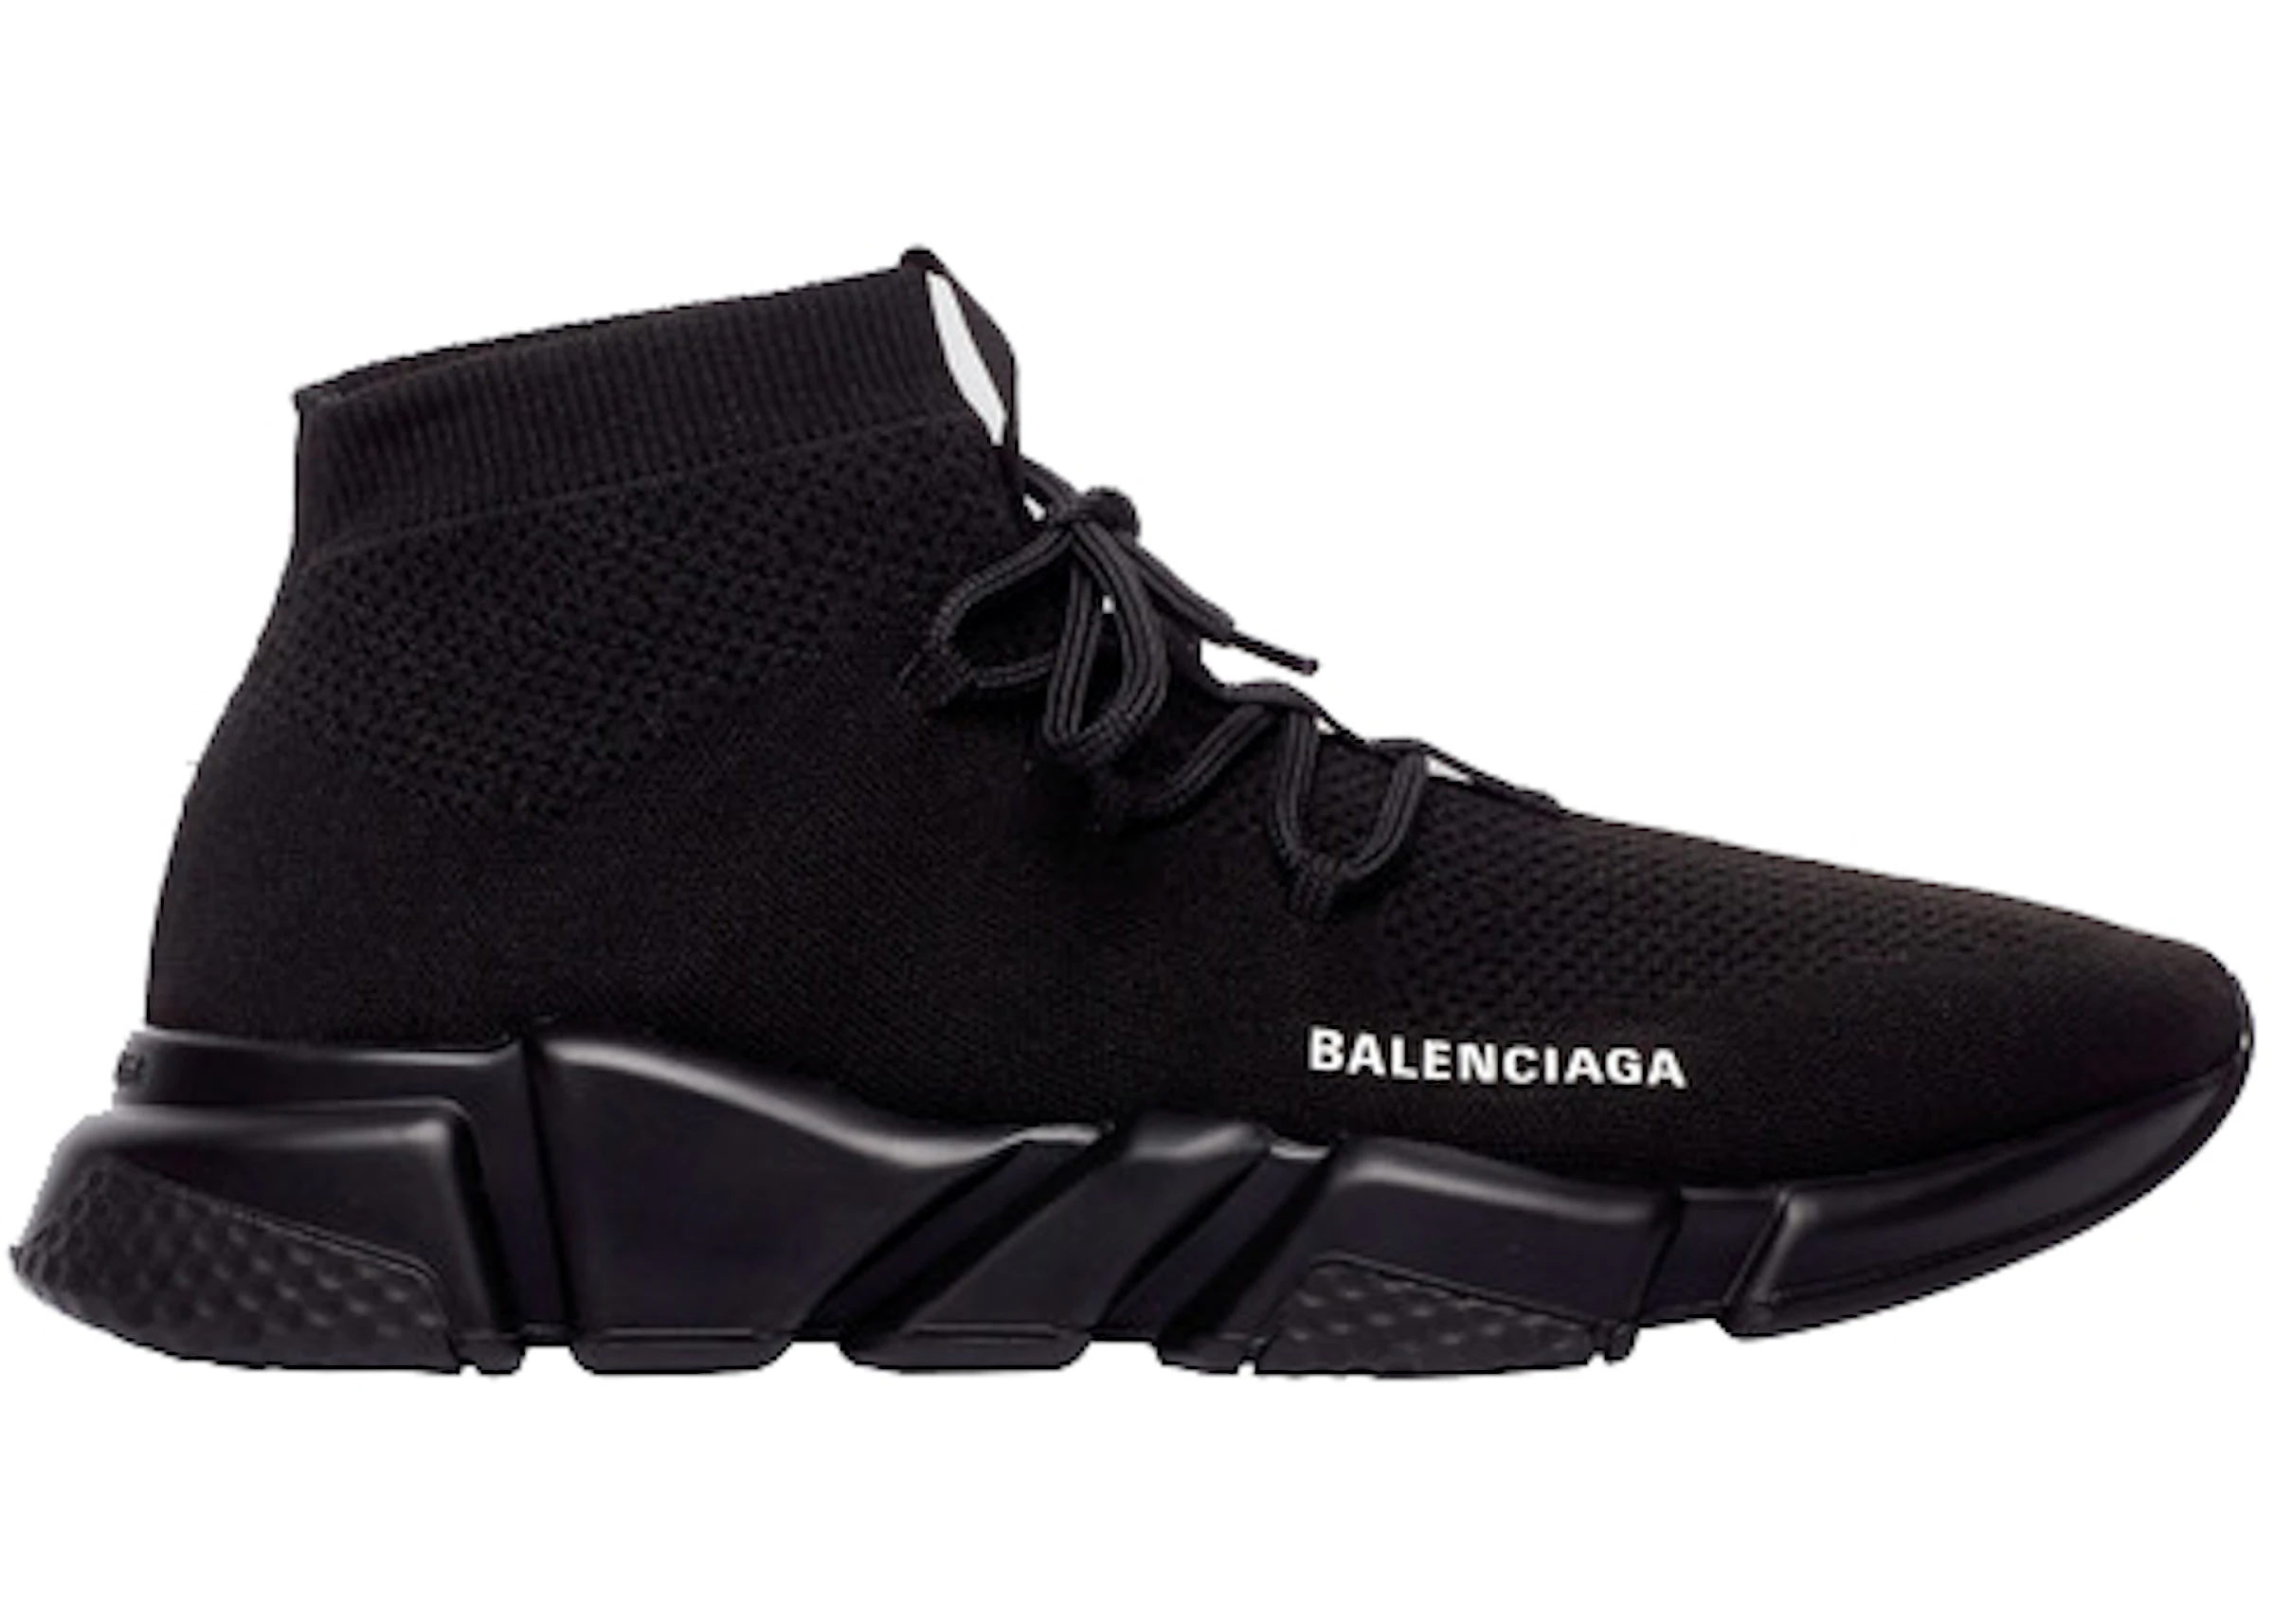 fringe Profession profile バレンシアガ スピード レースアップ "ブラック/ブラック" Balenciaga Speed Trainer Lace Up "Black" -  560236W1HP01000/587289W2DB11013 - JP